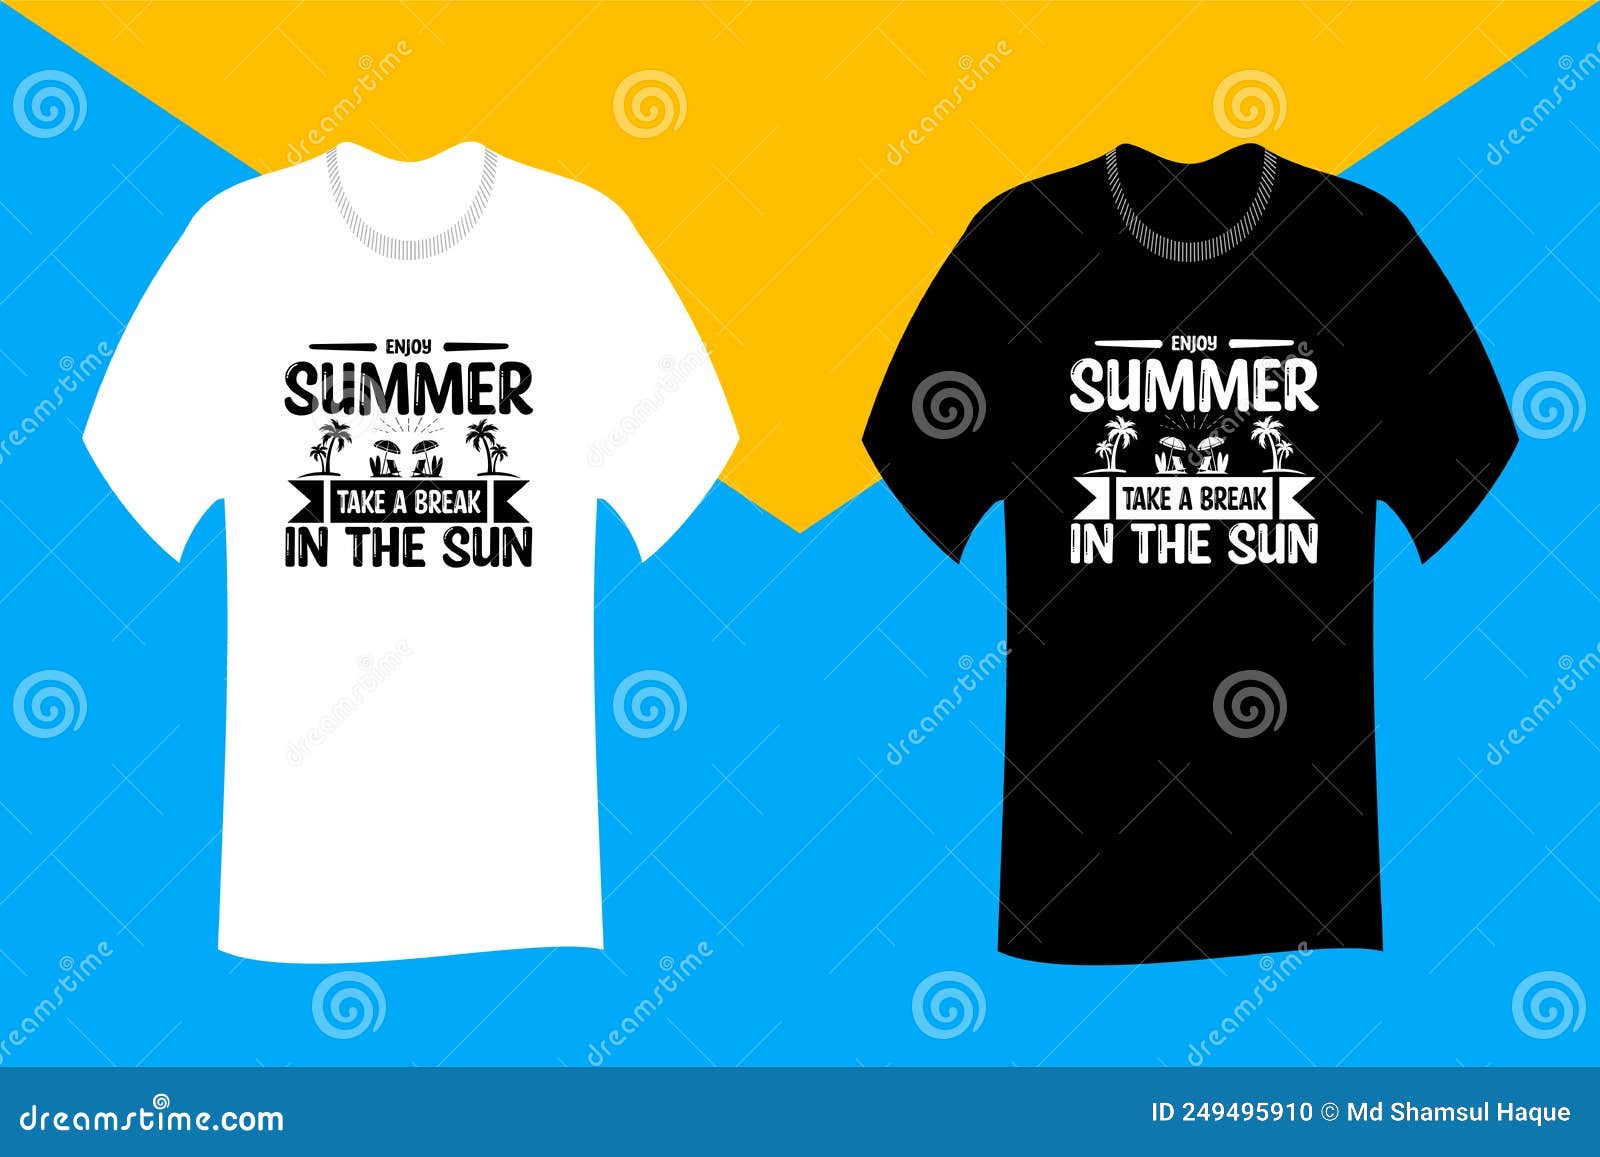 Enjoy Summer Take a Break in the Sun SVG T Shirt Design Stock Vector ...